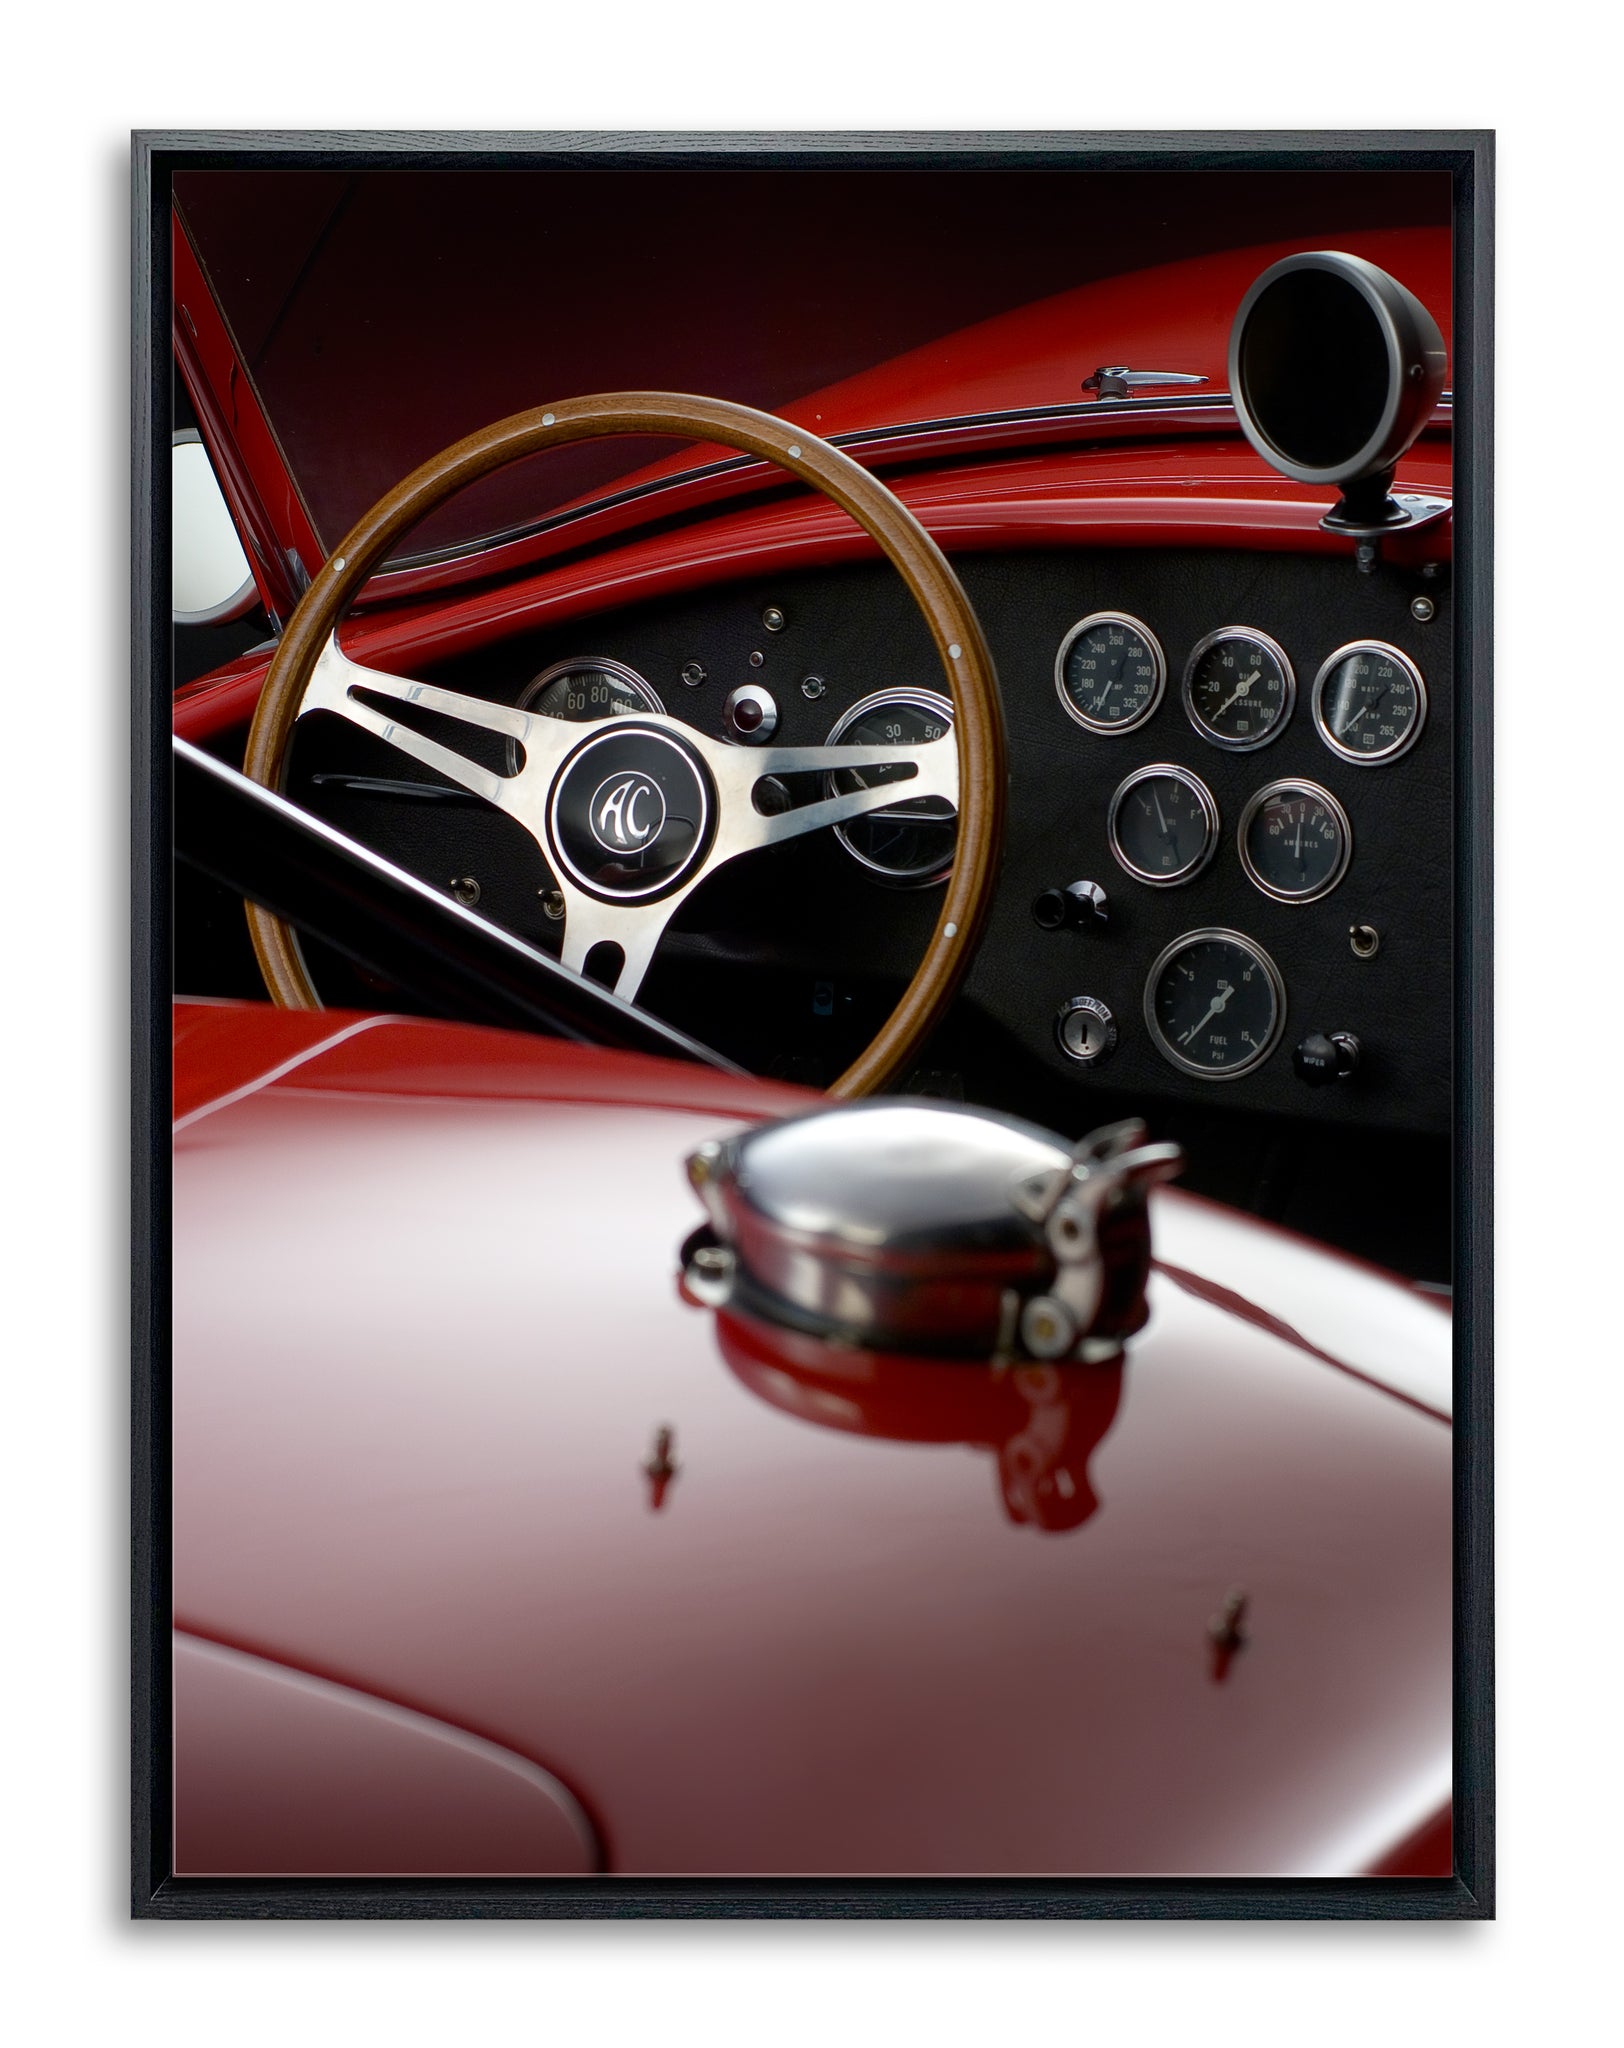 Shelby Cobra CSX 2430 Dashboard Detail by Boyd Jaynes